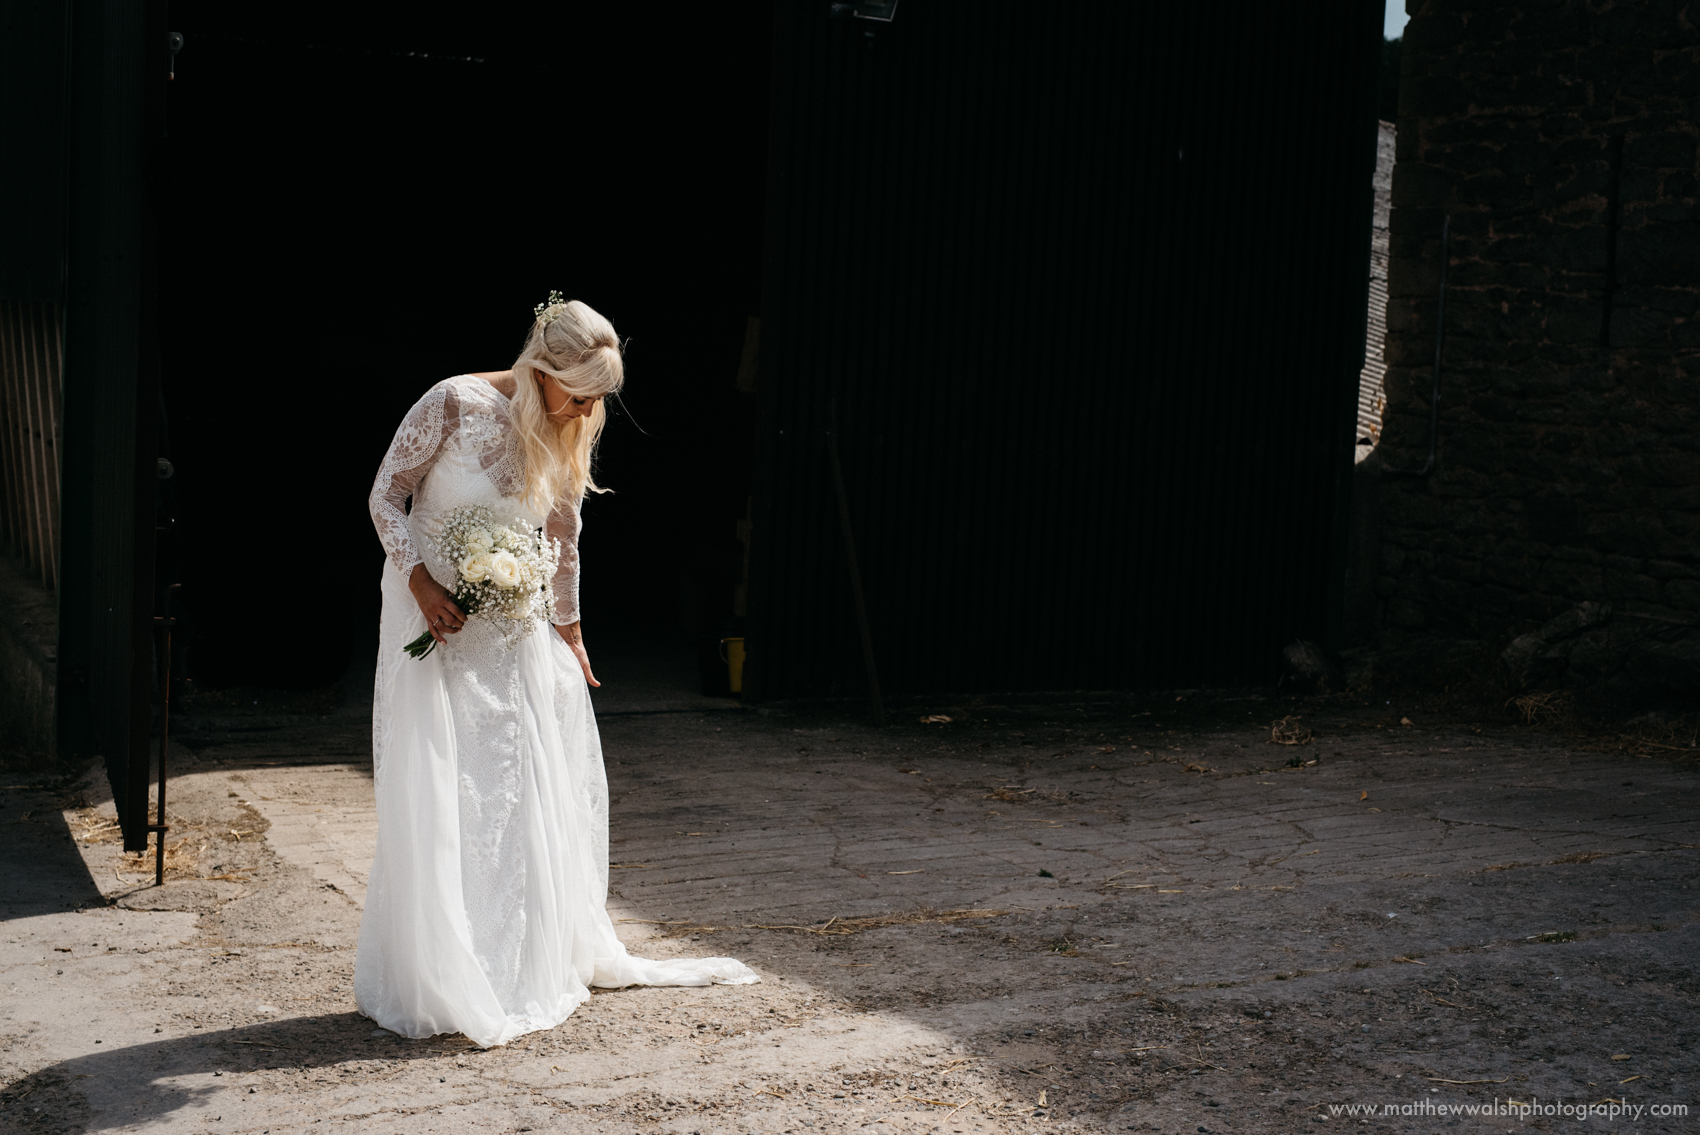 The bride captured in an observed pocket of light